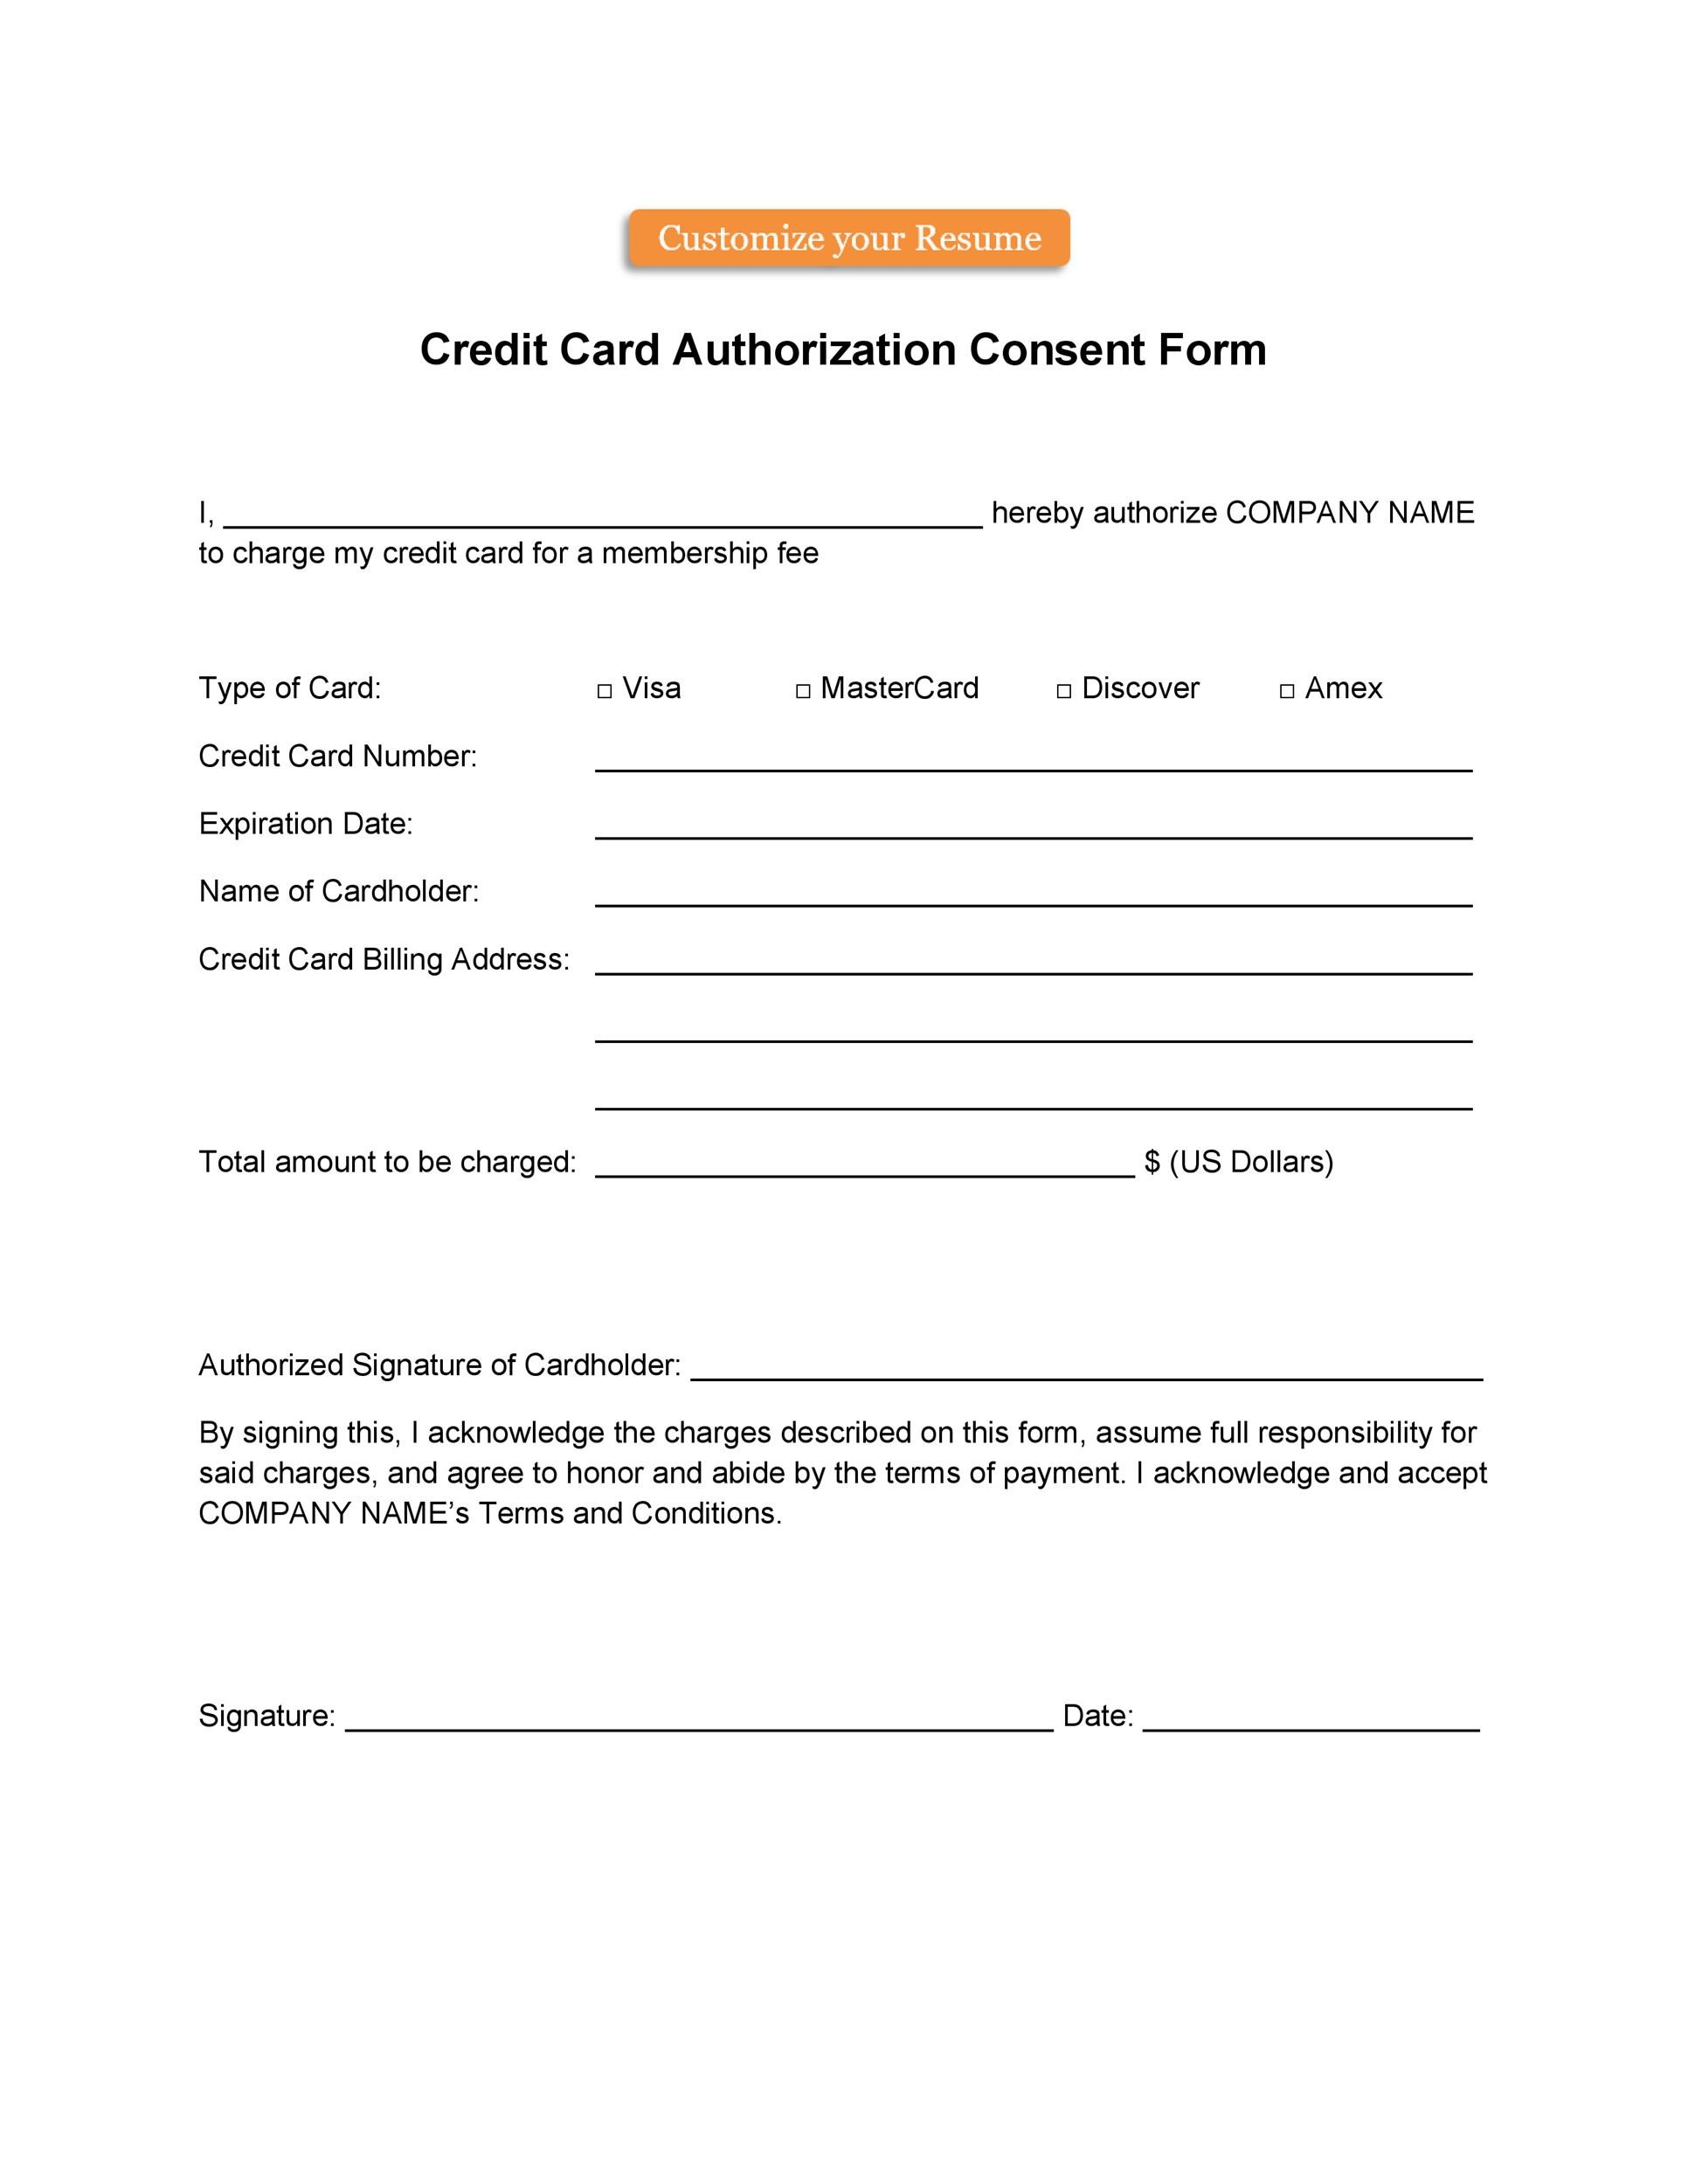 Car Rental Credit Card Authorization Form Rickey cypert